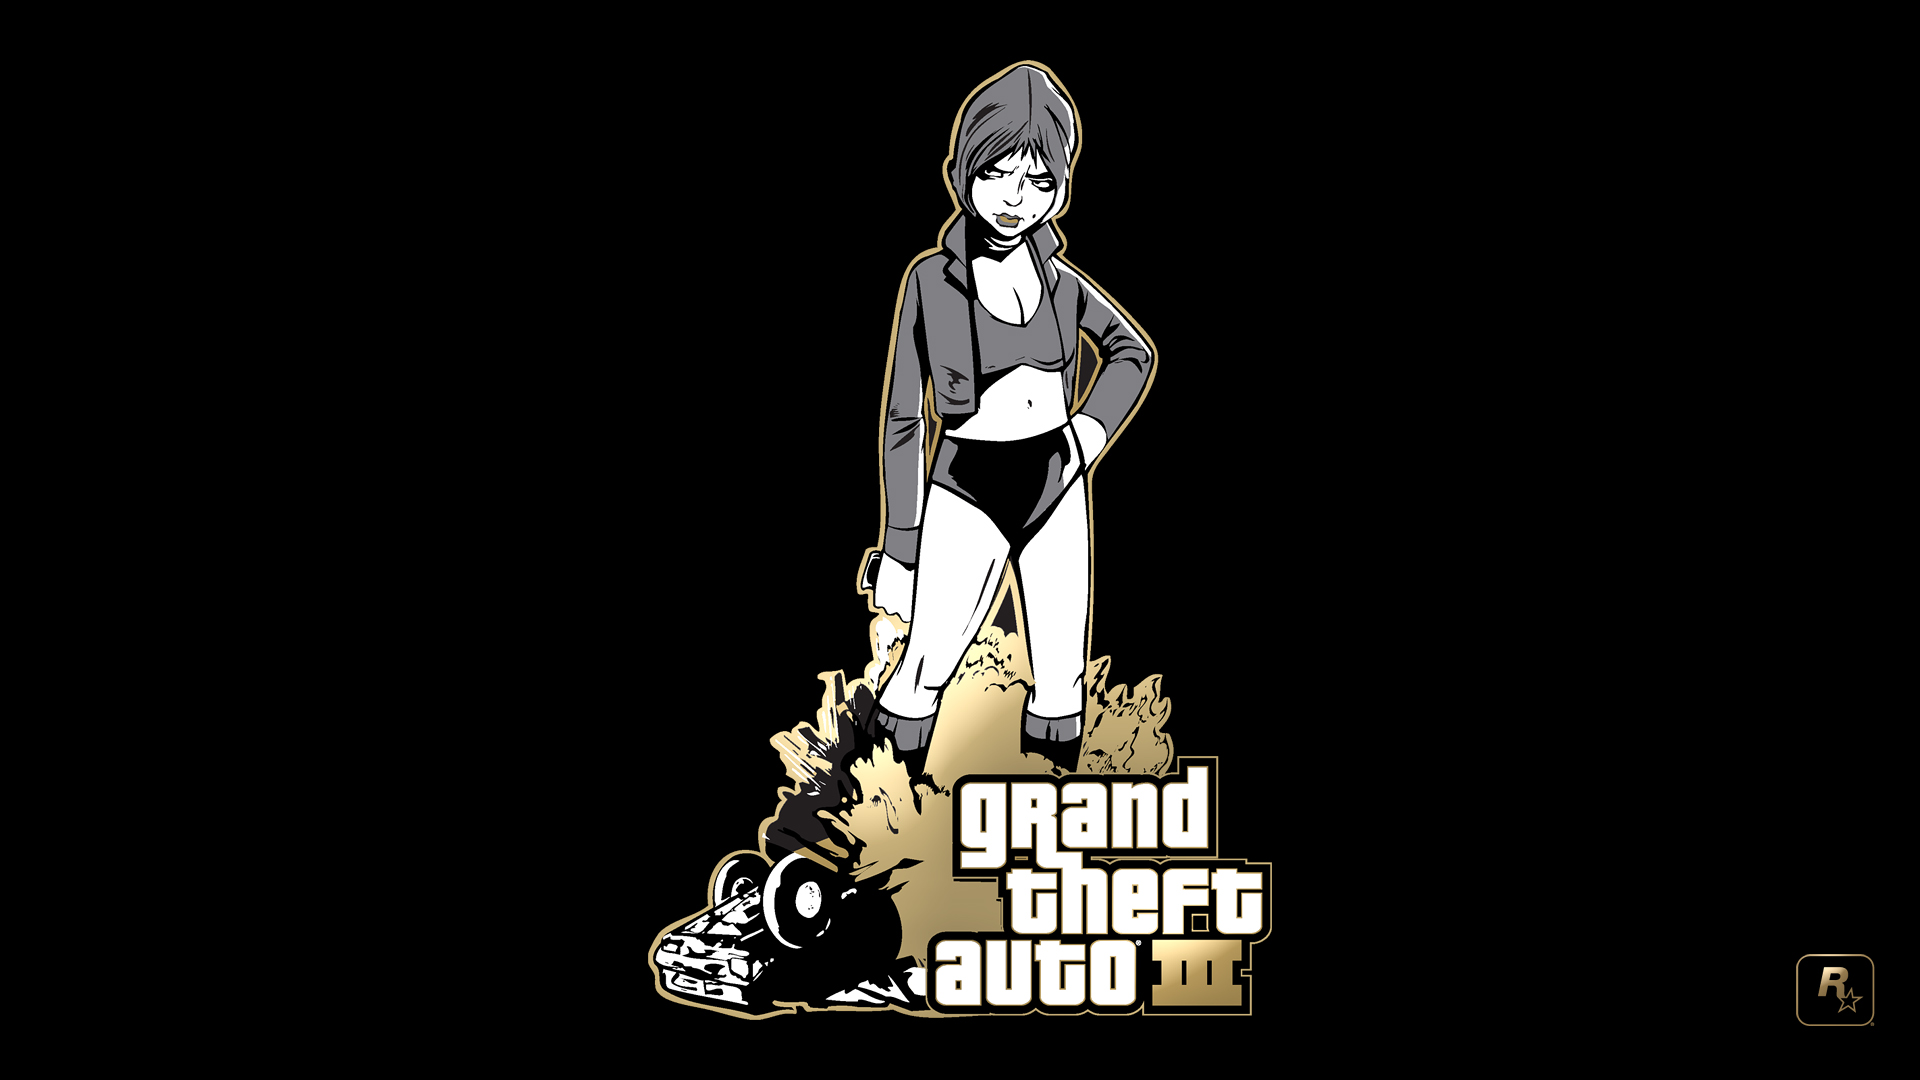 Grand Theft Auto III HD Wallpaper